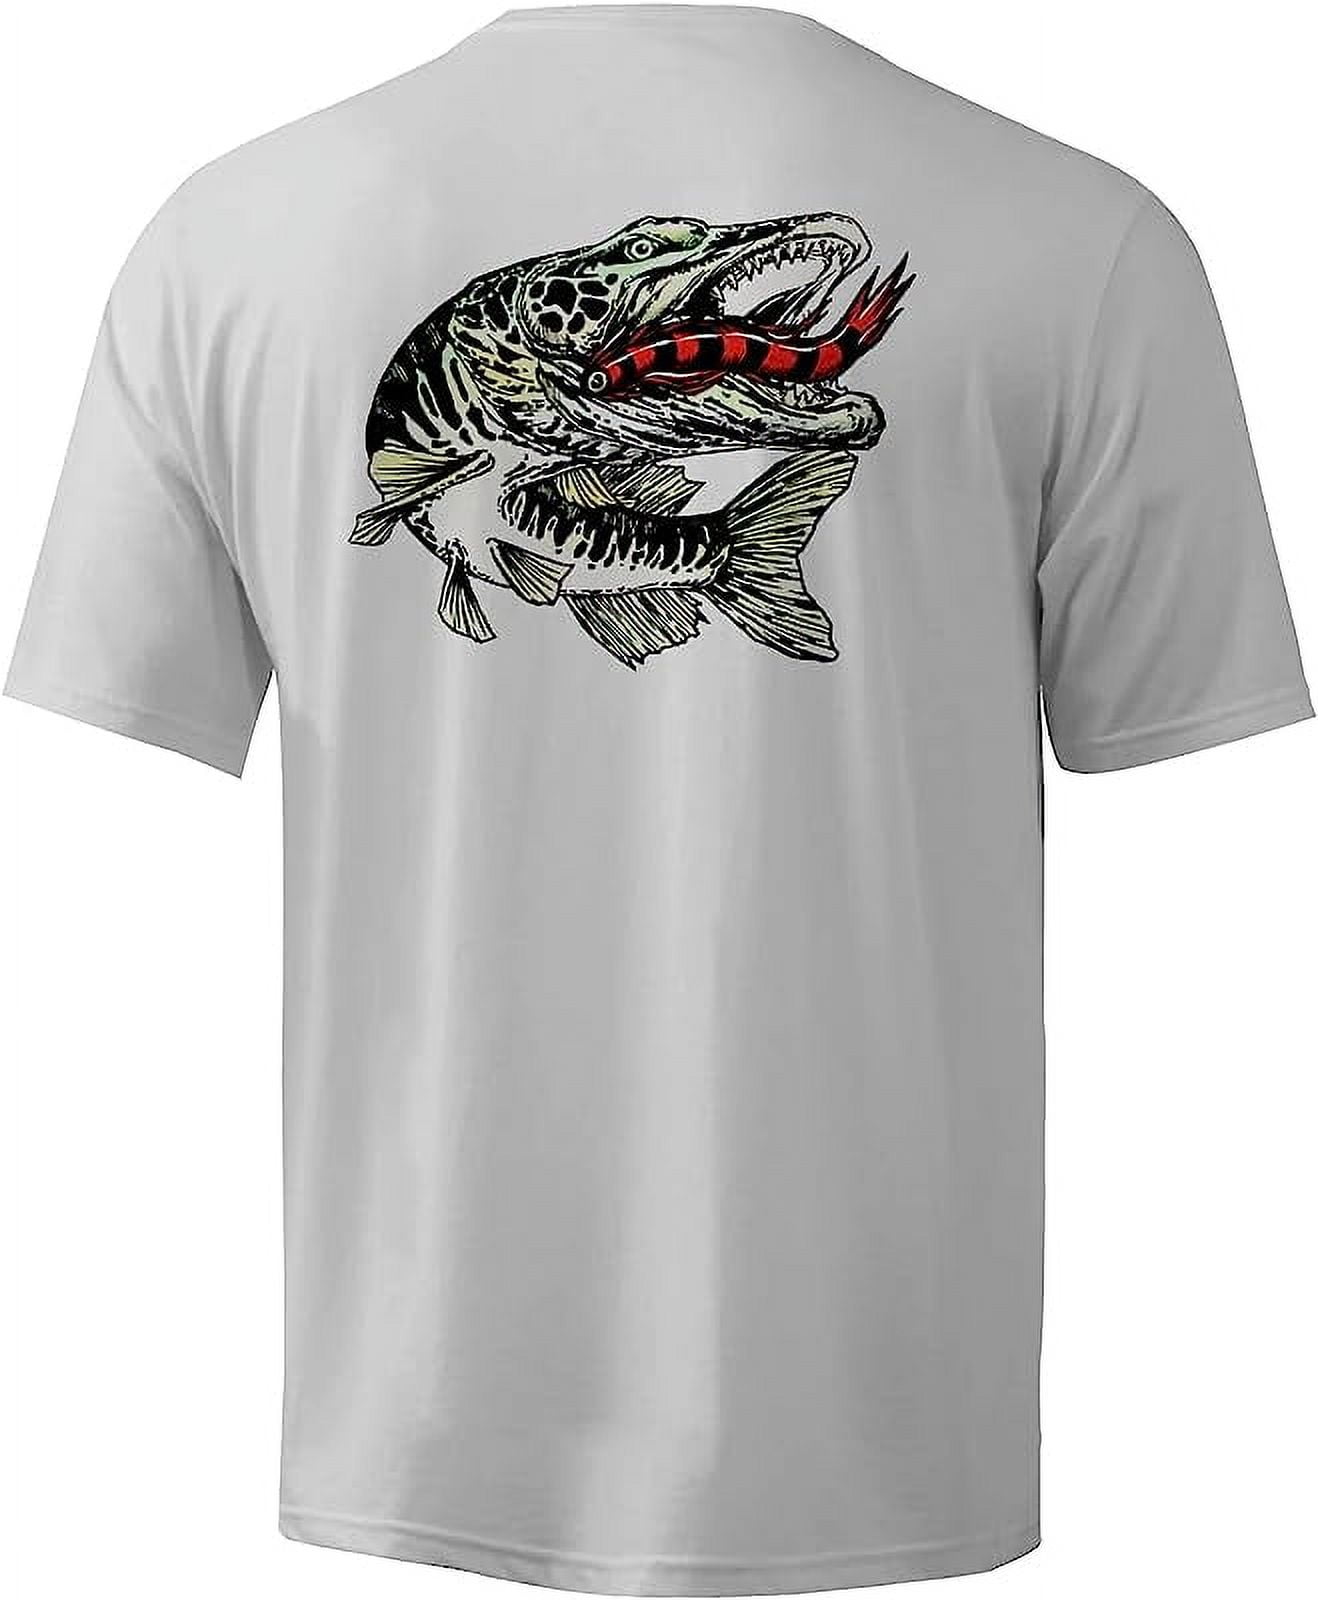 Palmyth Fishing Shirt for Men Long Sleeve Sun Protection UV UPF 50